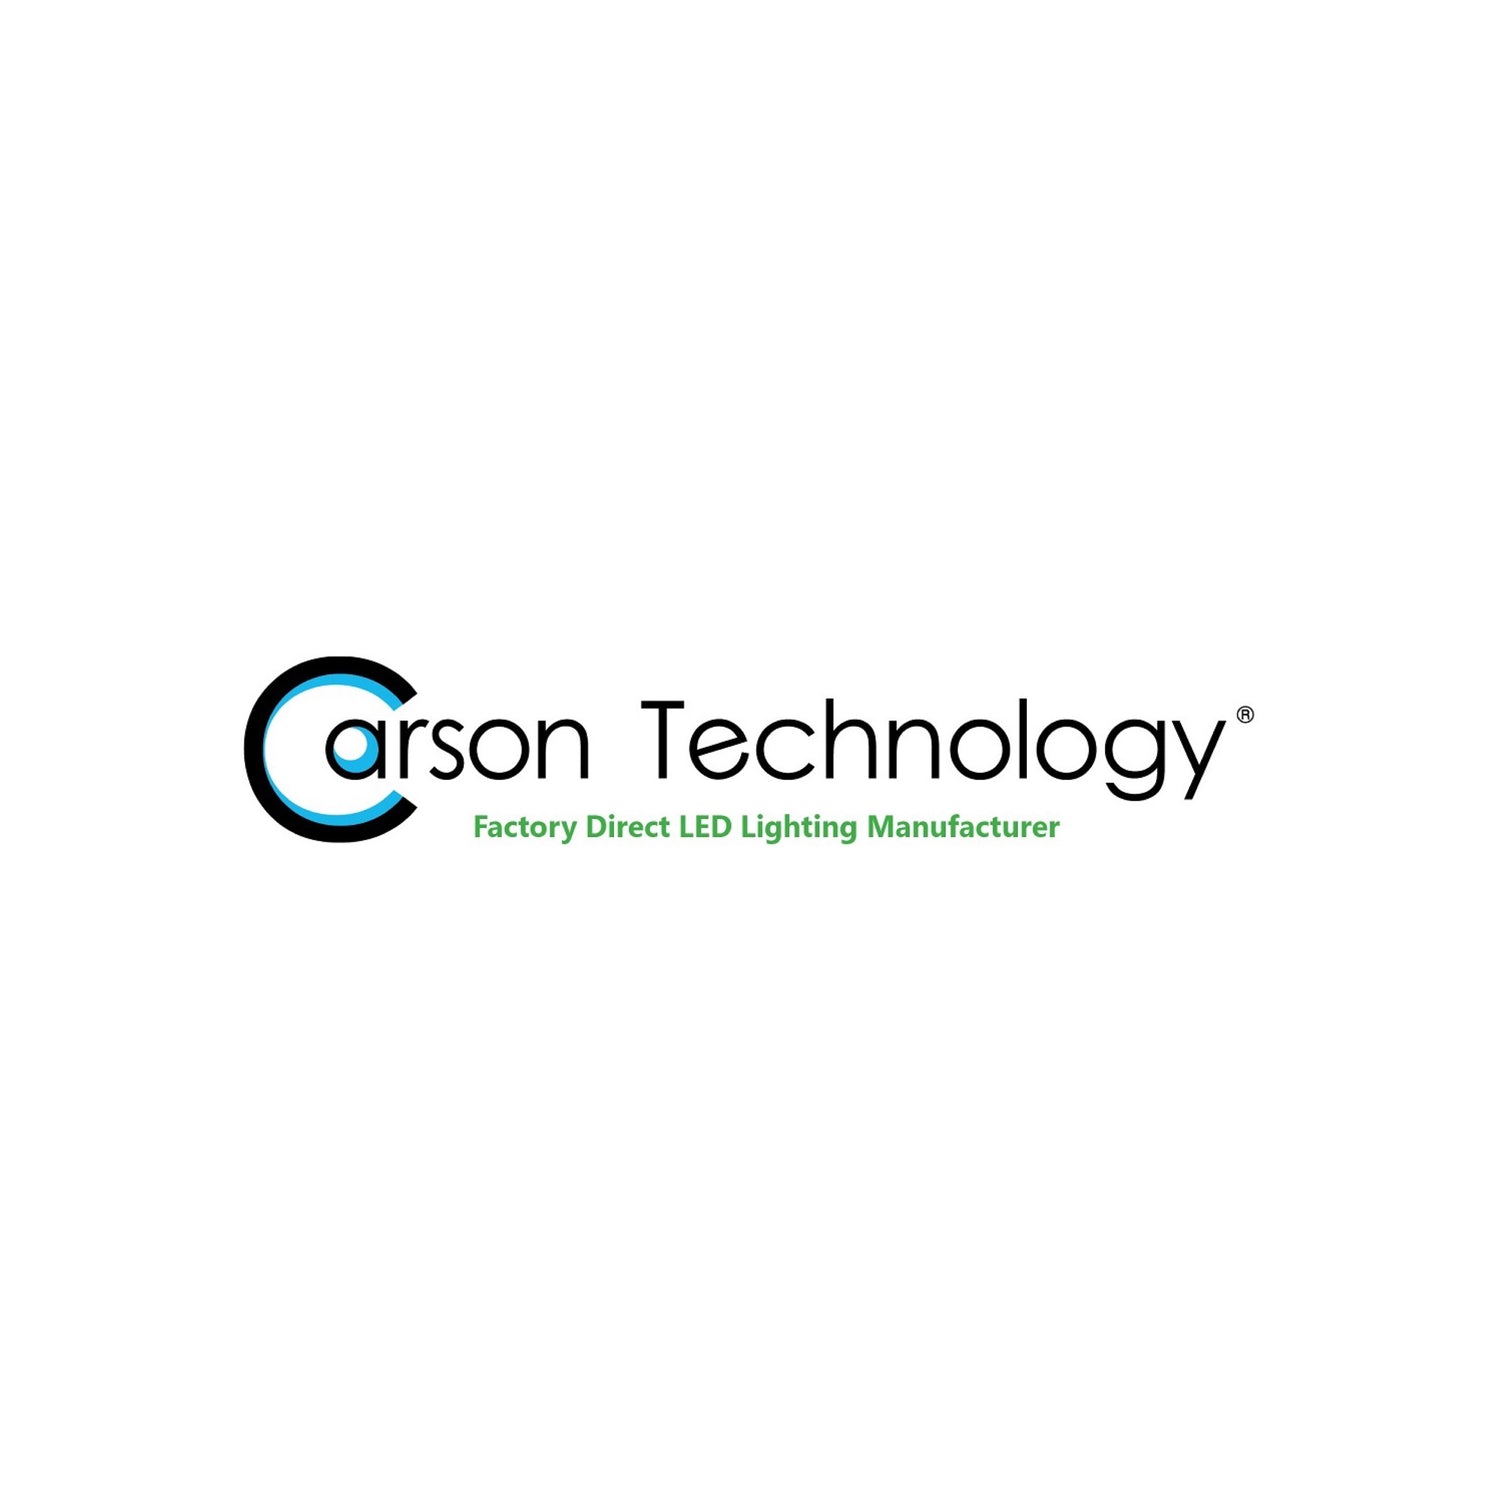 CARSON TECHNOLOGY COMPANY